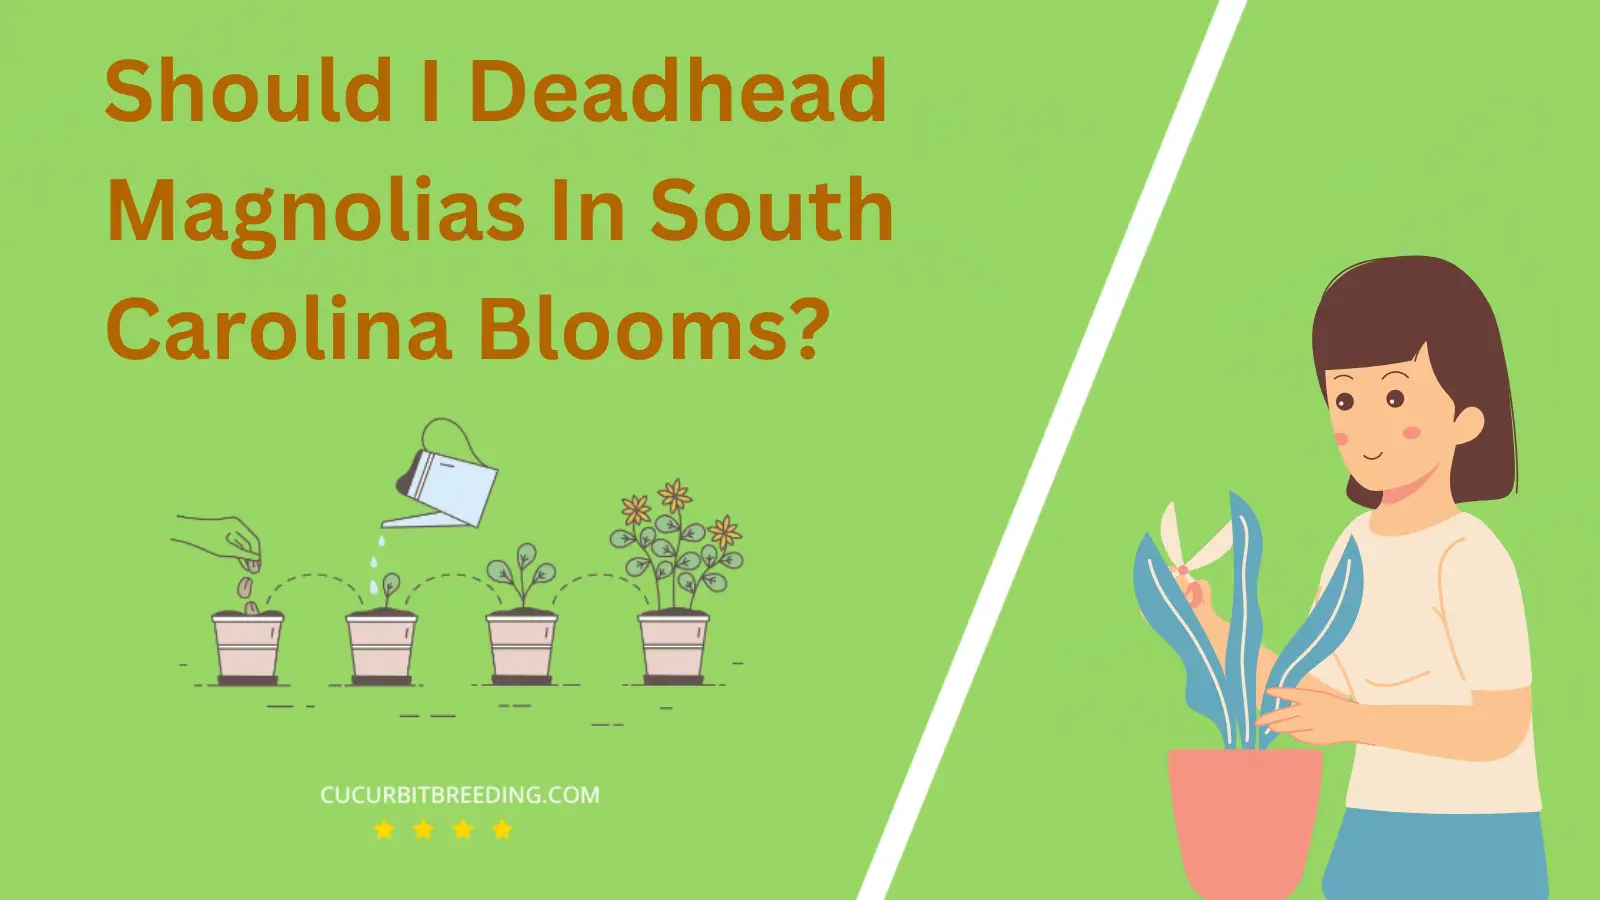 Should I Deadhead Magnolias In South Carolina Blooms?